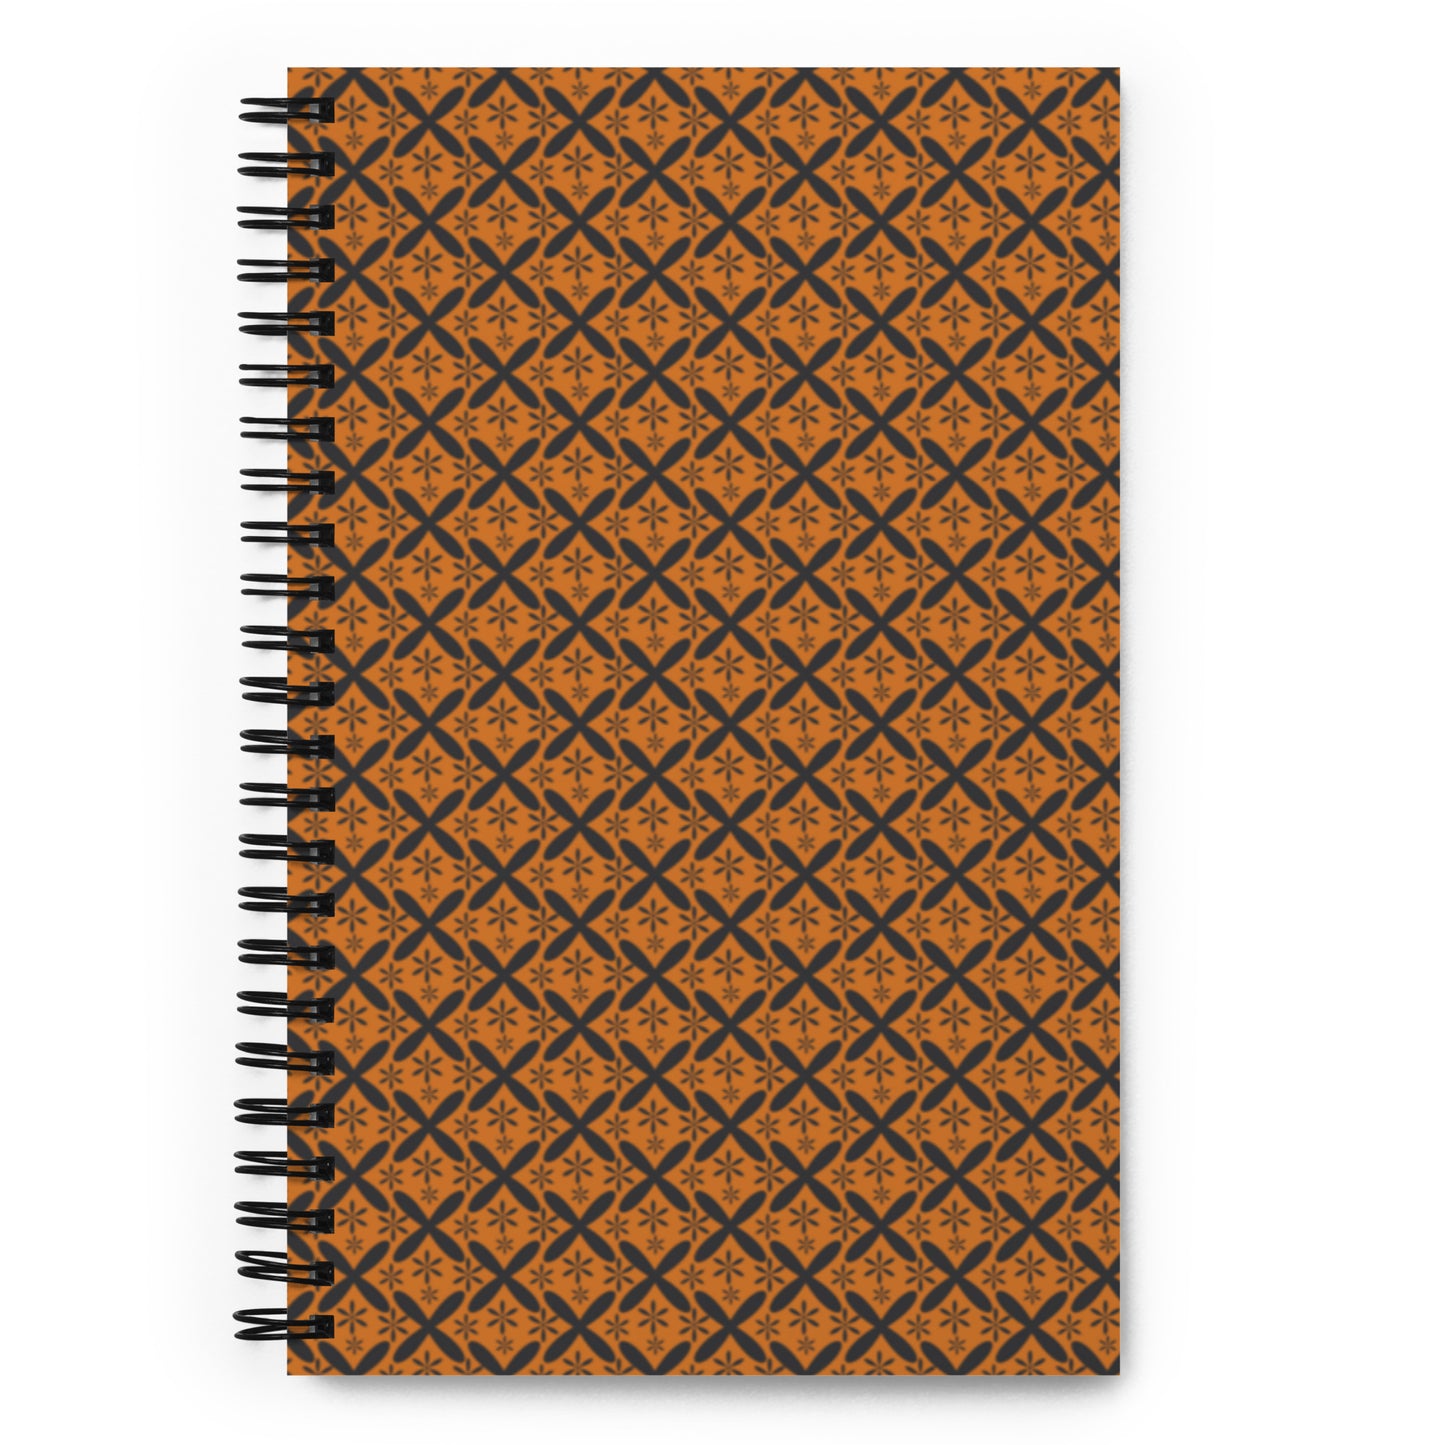 Orange and Black Spiral notebook